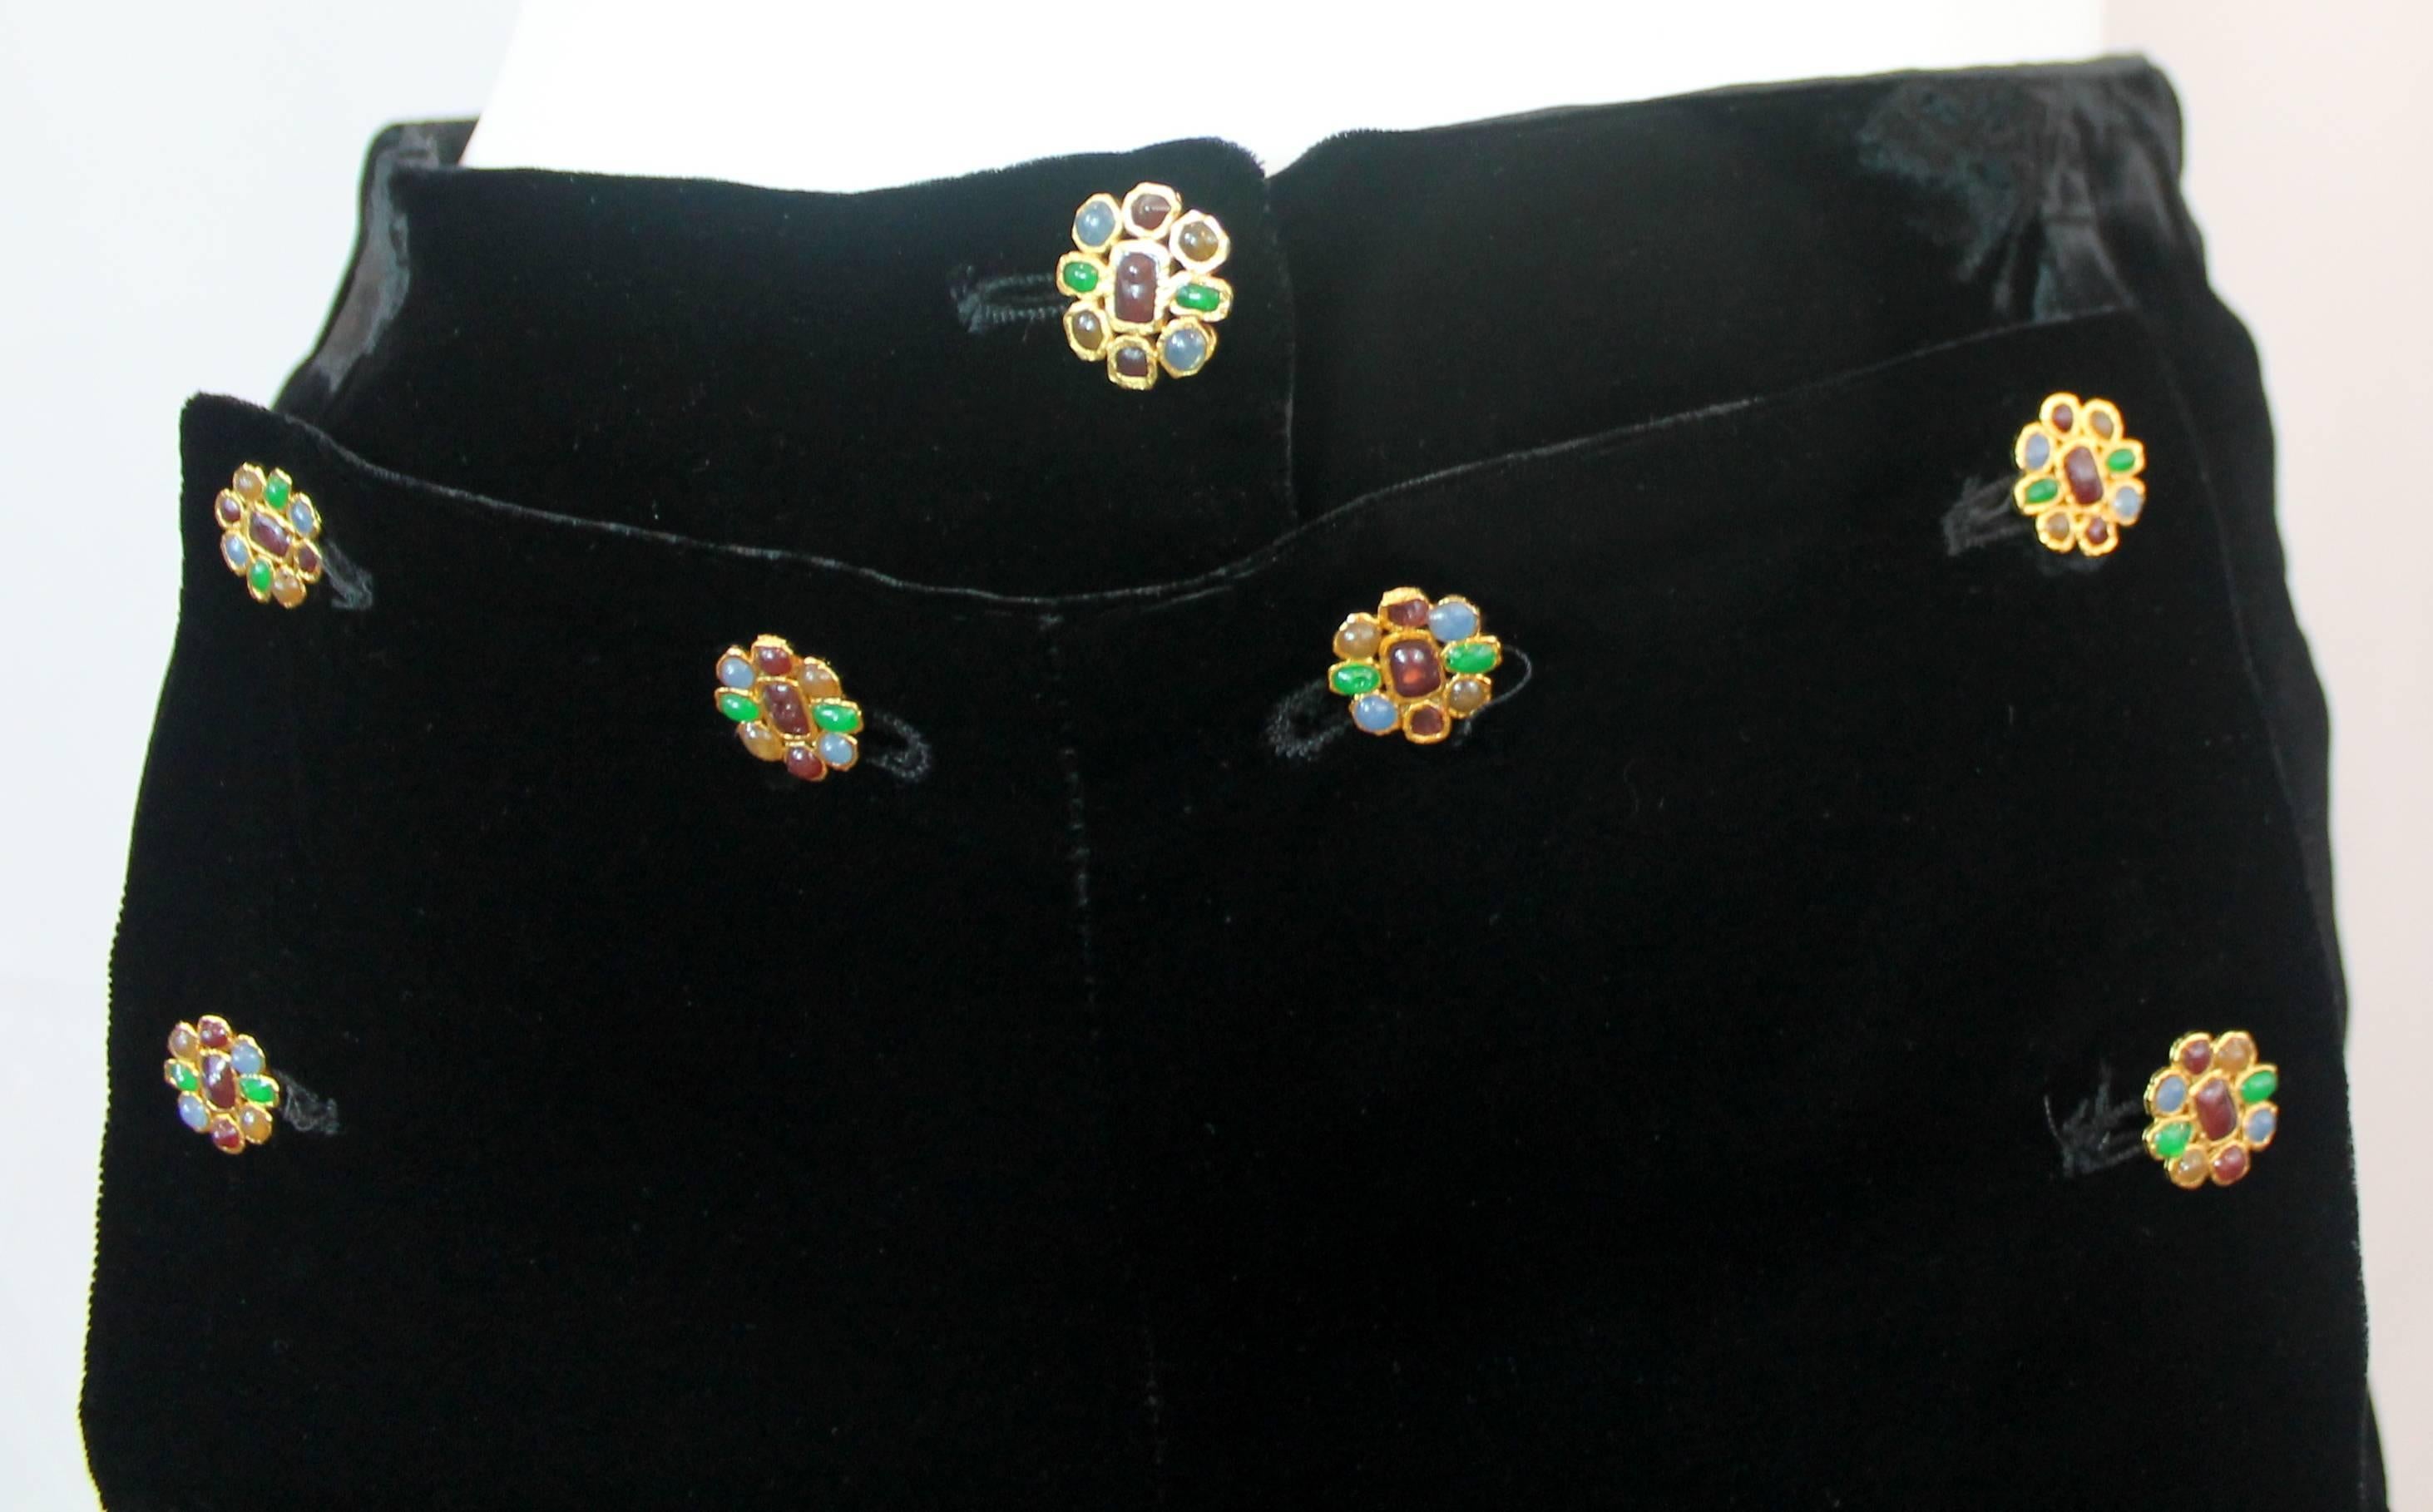 Chanel Black Velvet Sailor Style Pants with Gripoix Buttons - 34 - 1980's 3